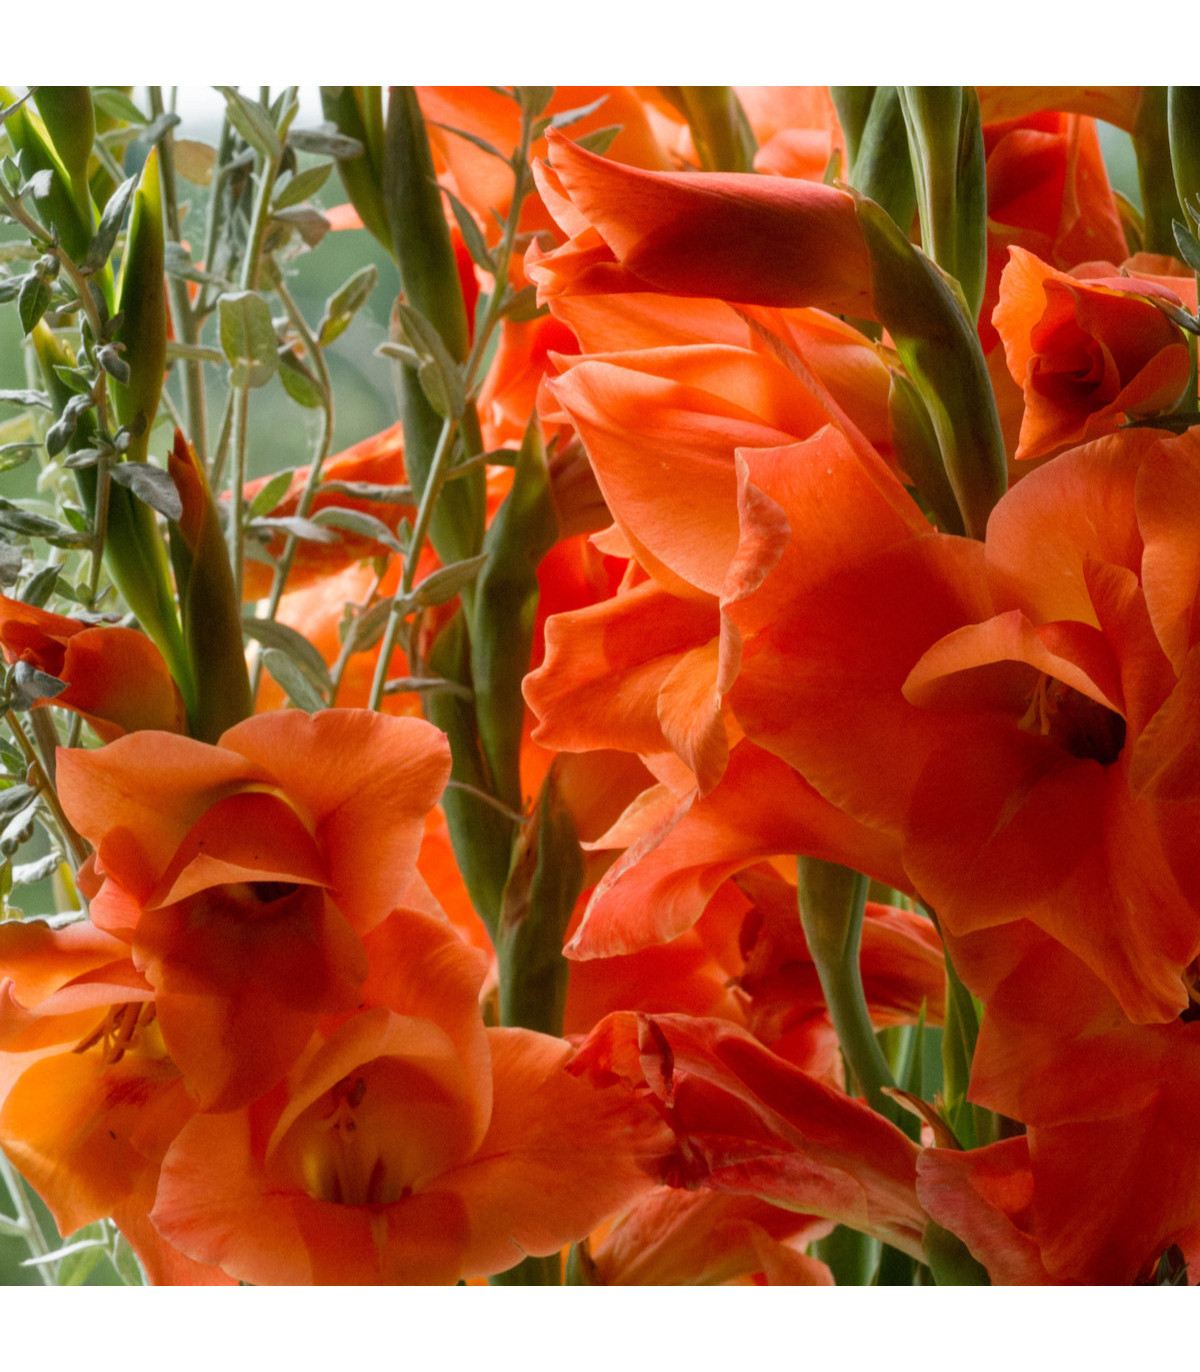 Gladiola oranžová - Gladiolus - gladioly - hľuzy gladioly - 3 ks